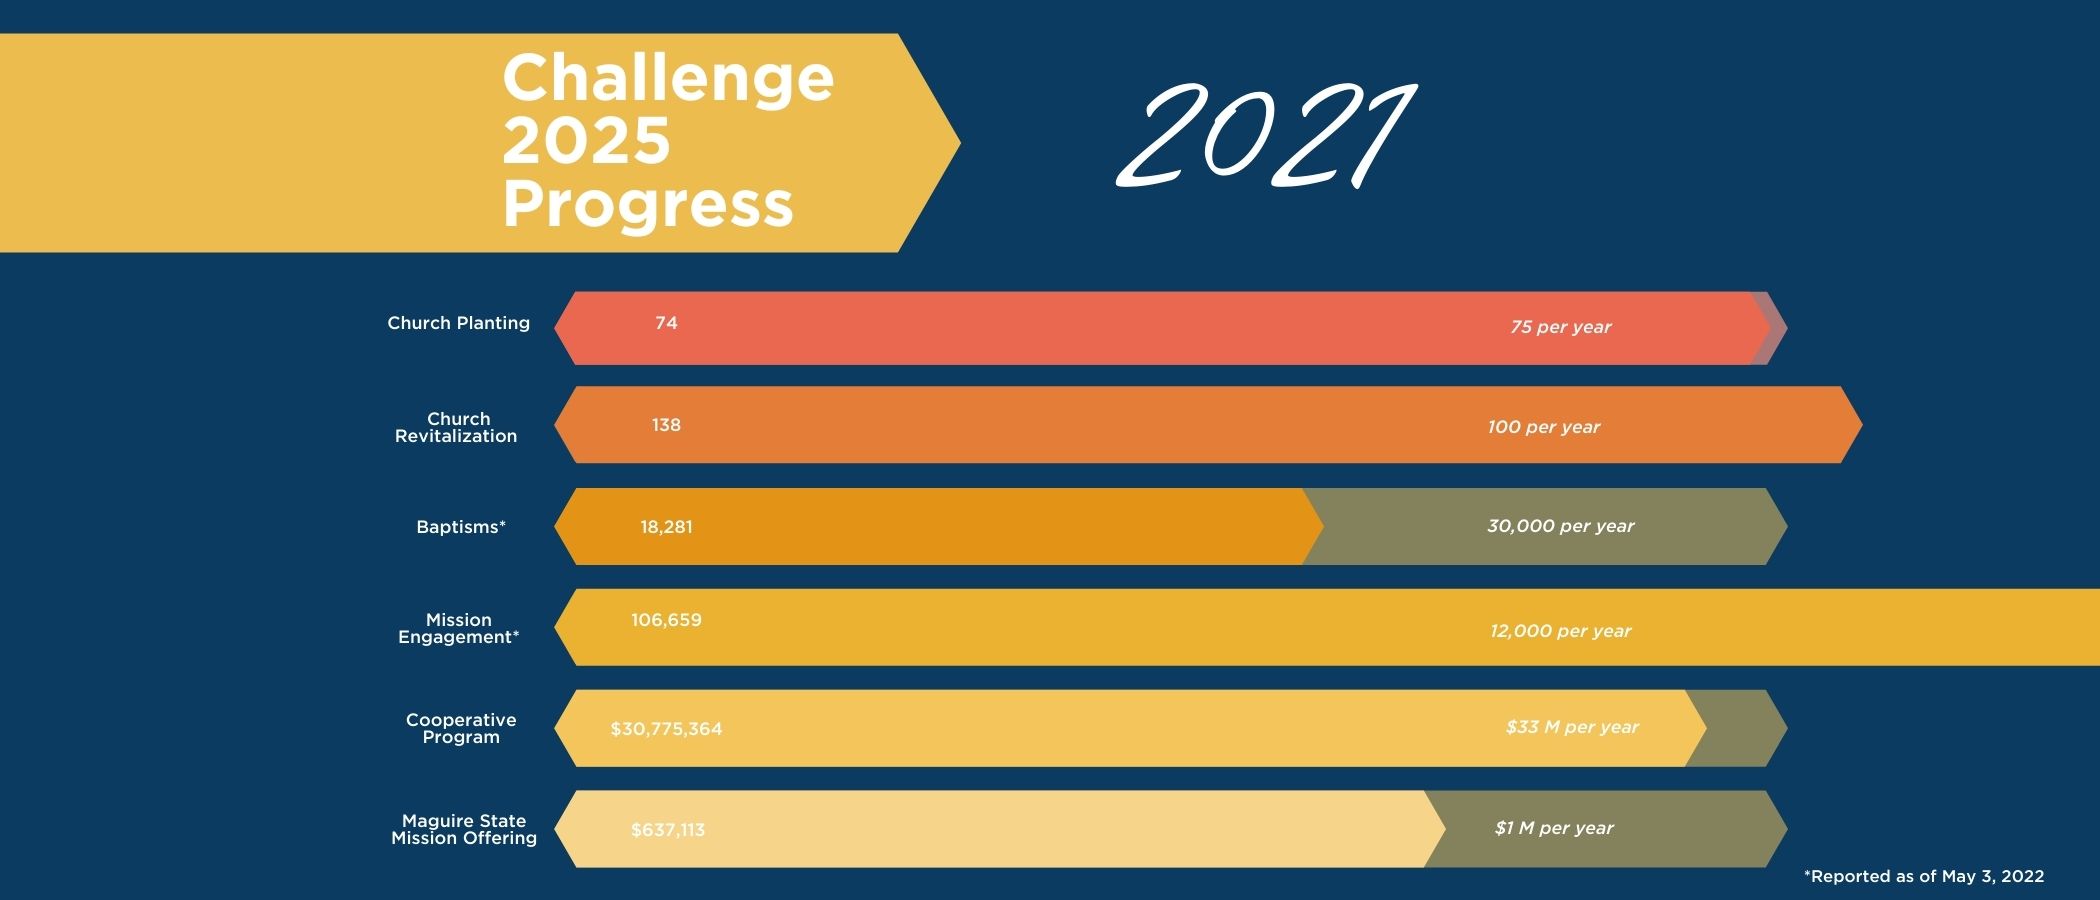 Challenge 2025